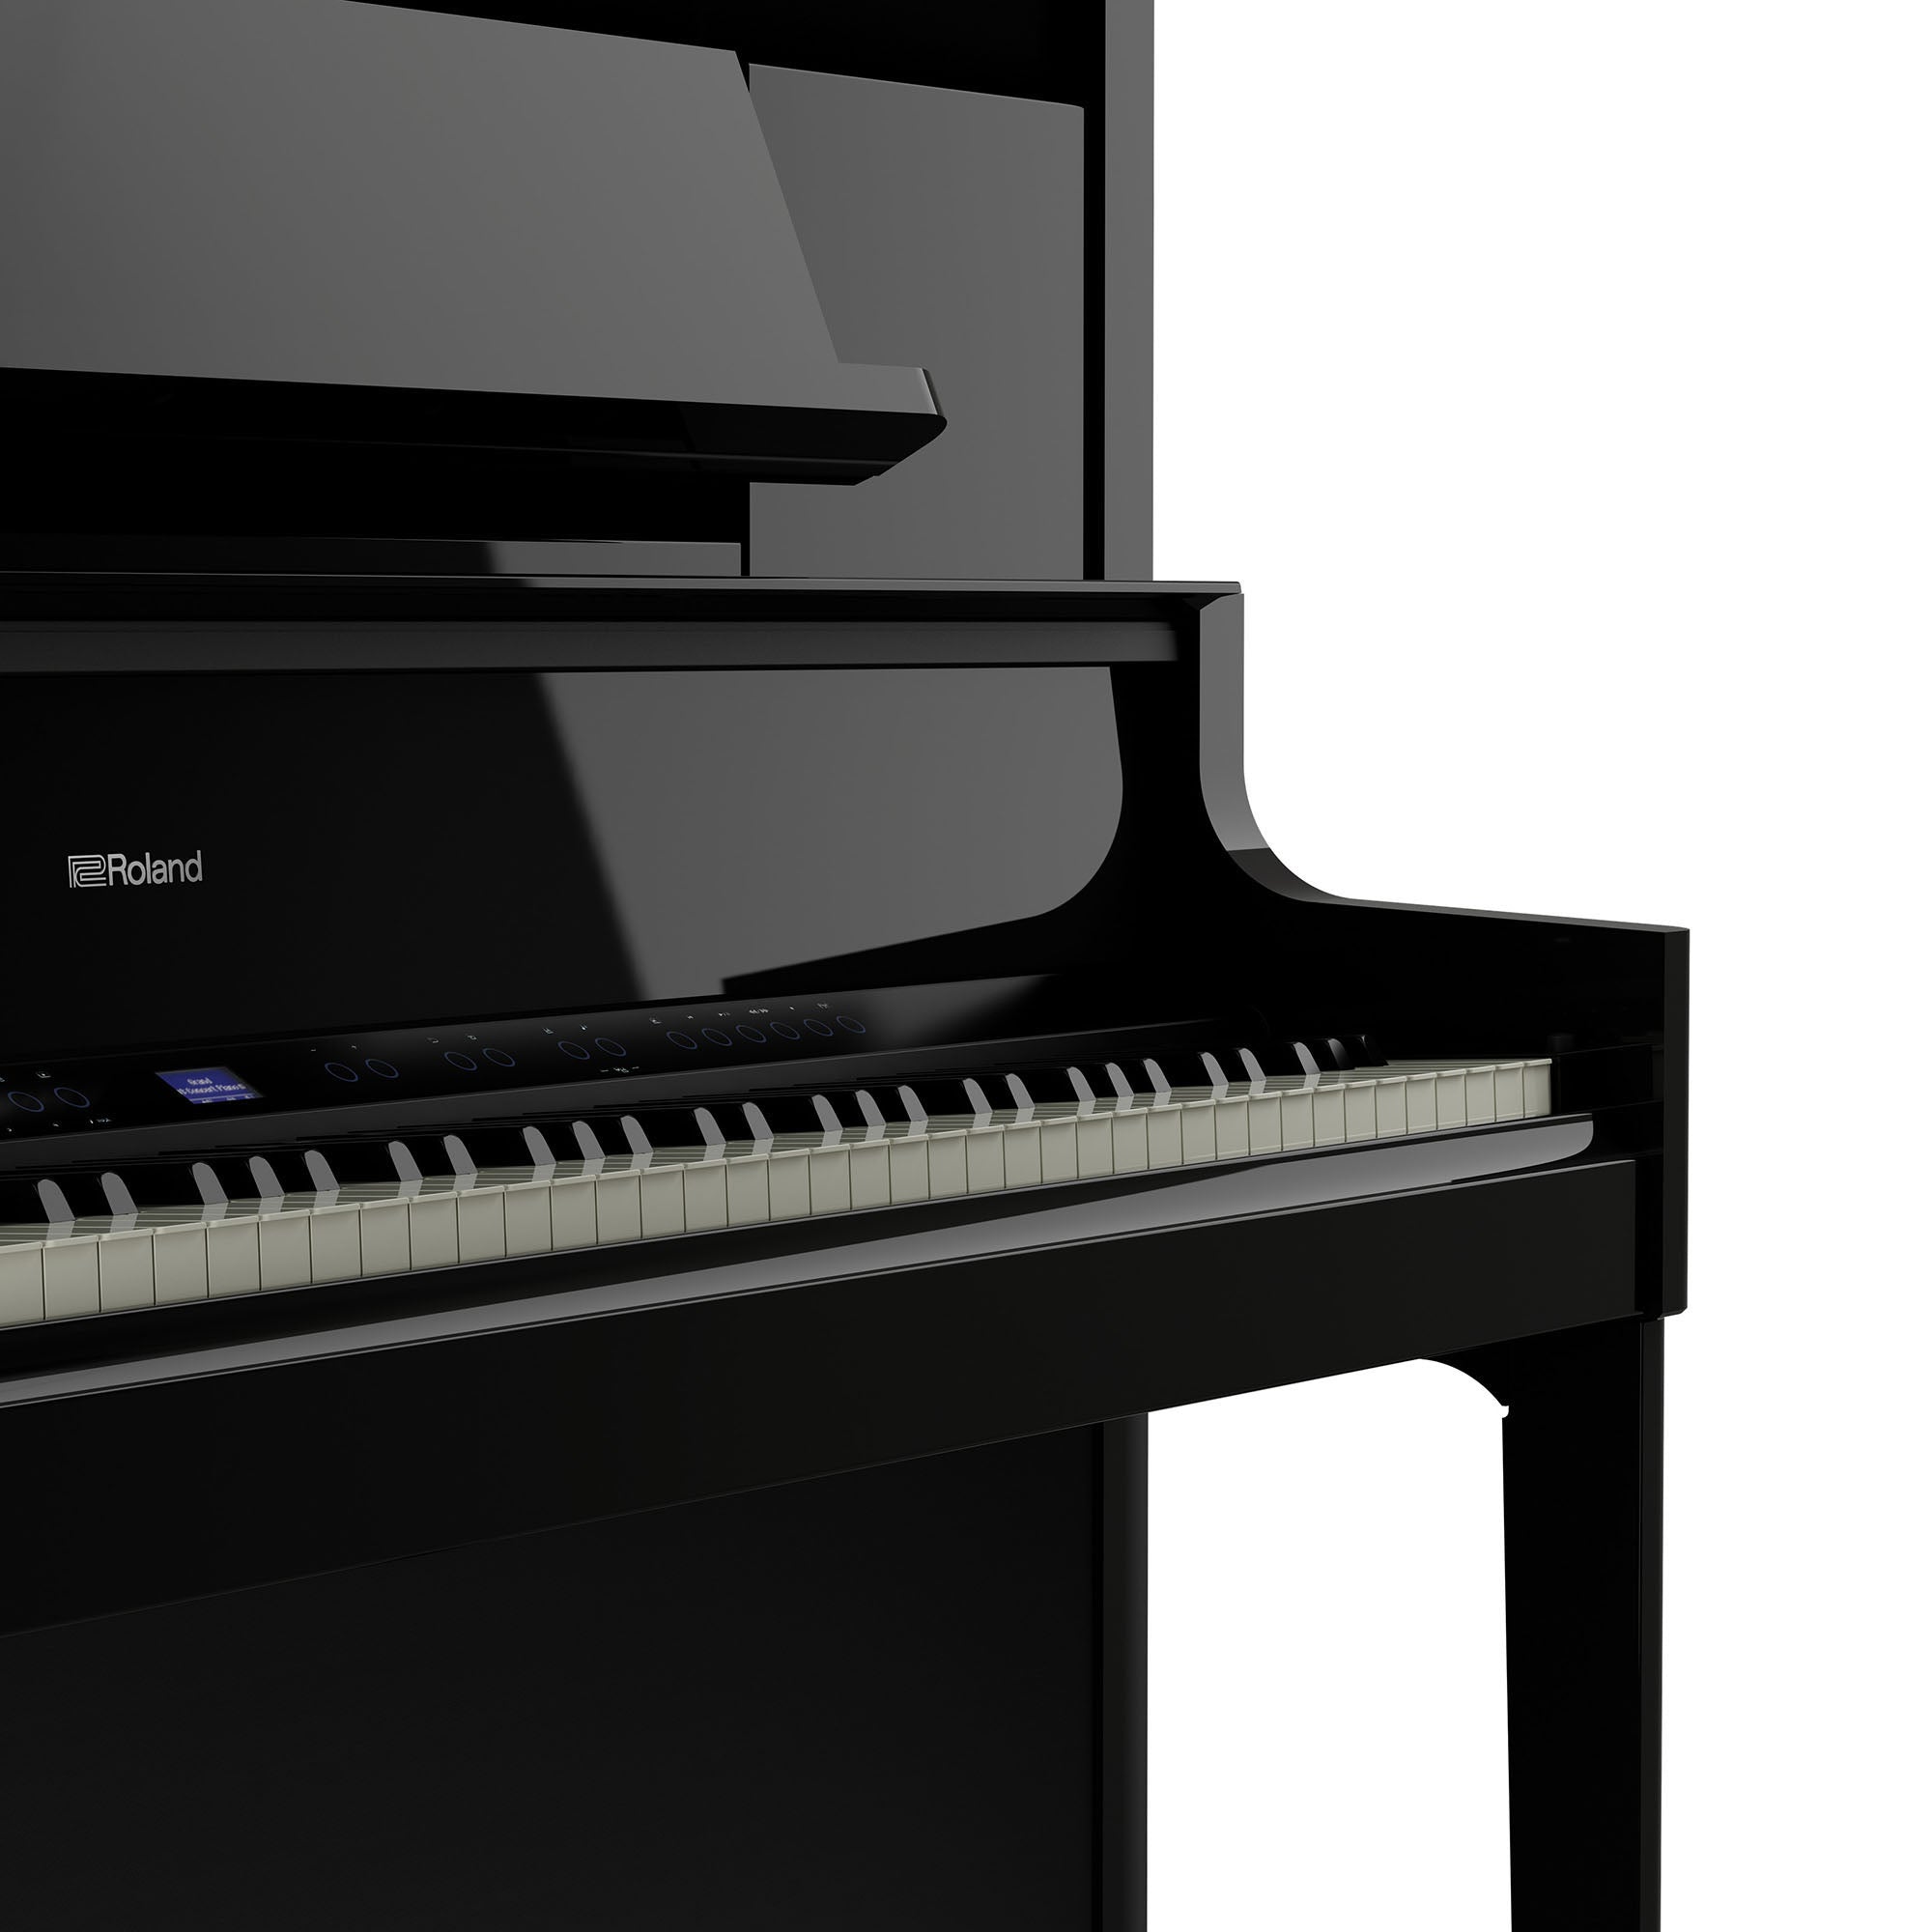 Roland LX-9 Digital Piano with Bench - Polished Ebony, View 11